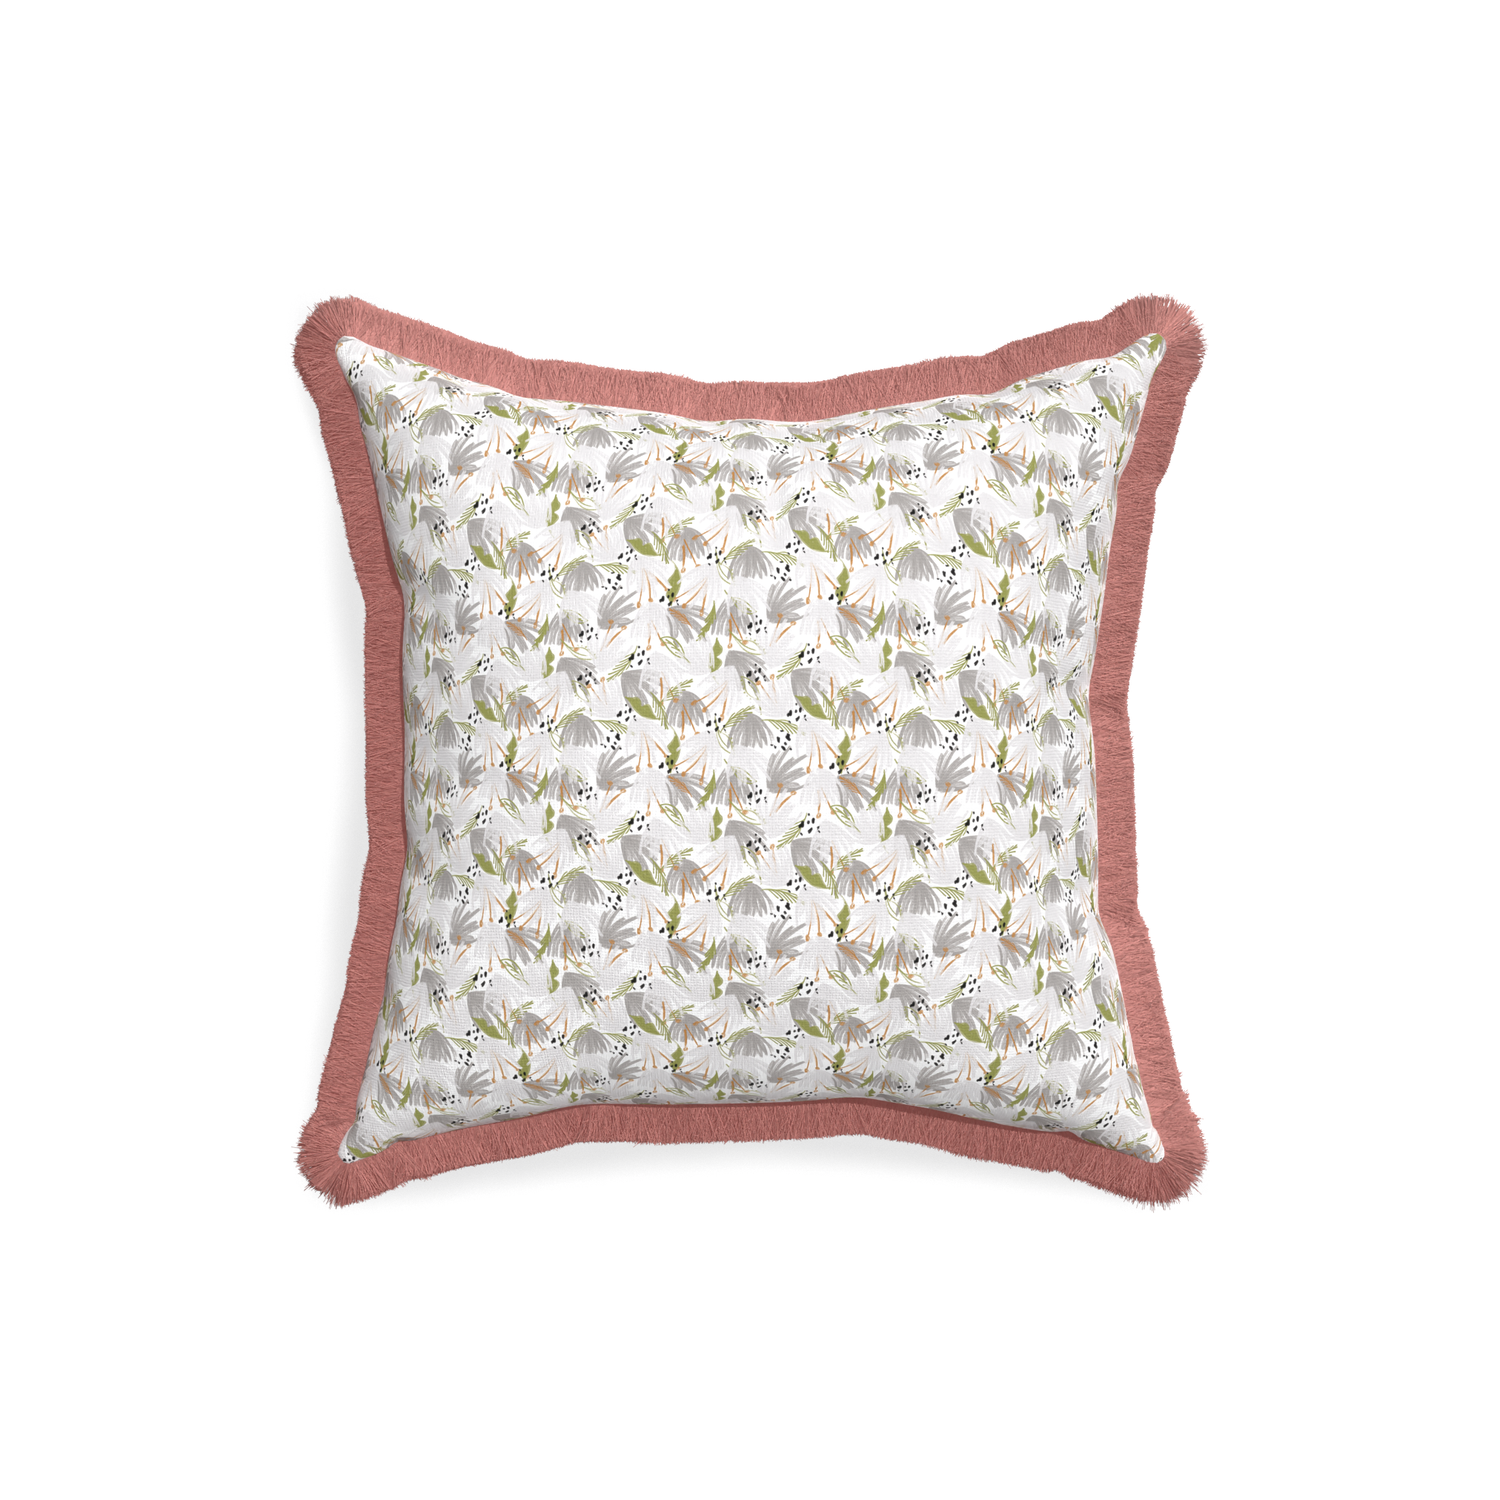 18-square eden grey custom pillow with d fringe on white background